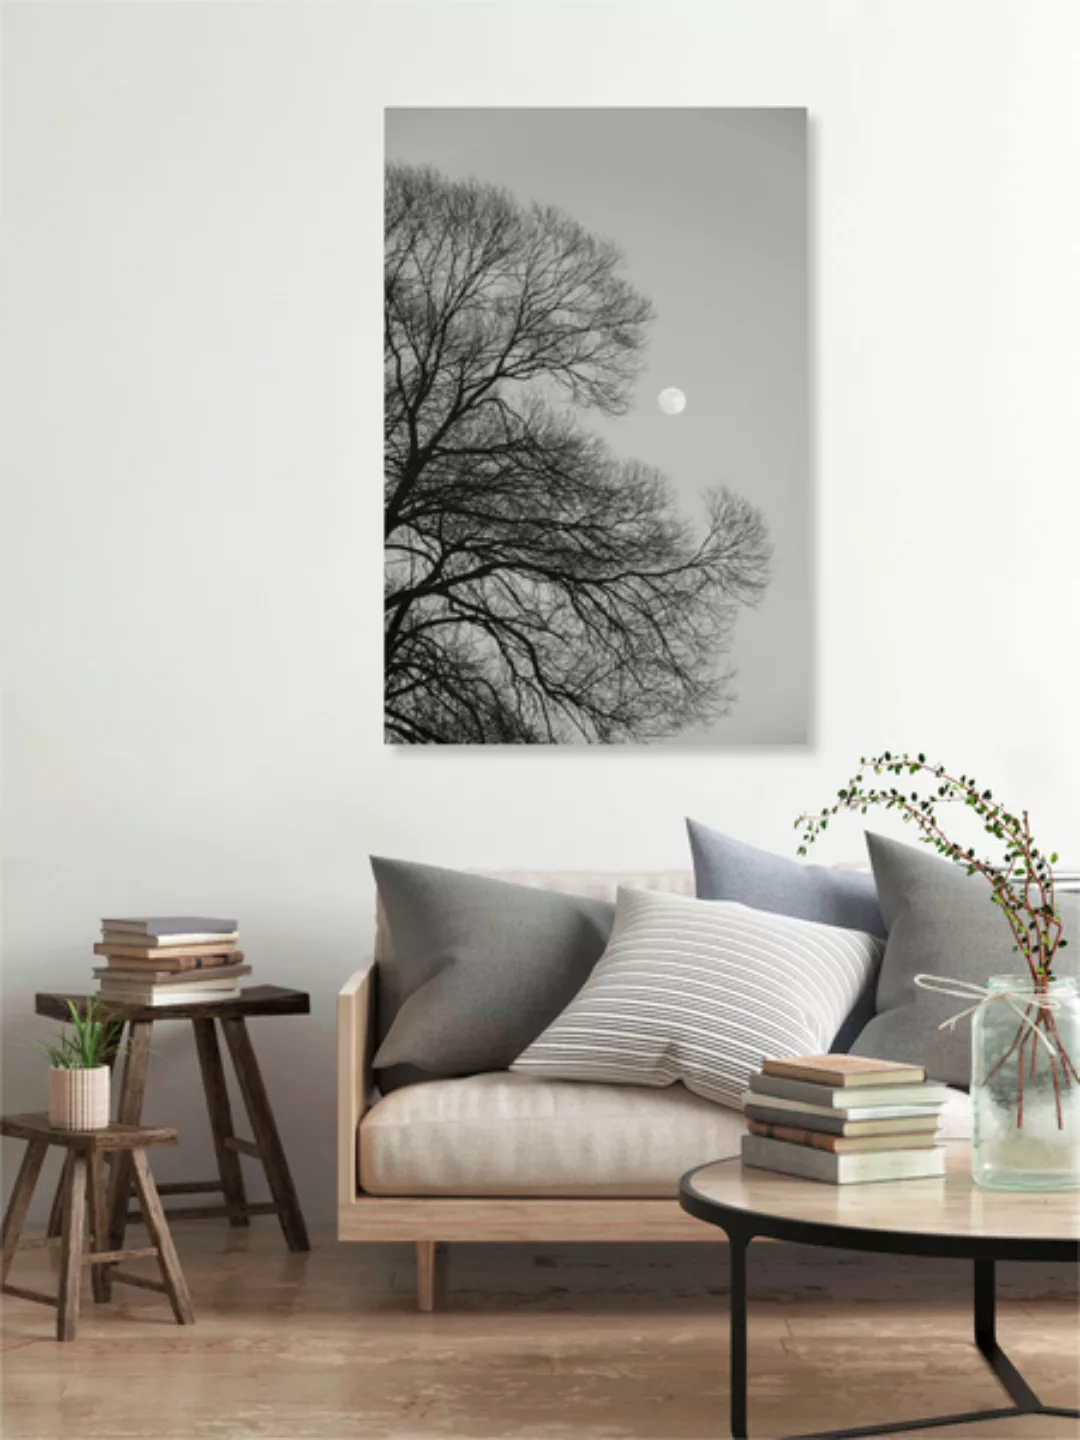 Poster / Leinwandbild - Full Moon Loves Winter Tree - Black & White Edition günstig online kaufen